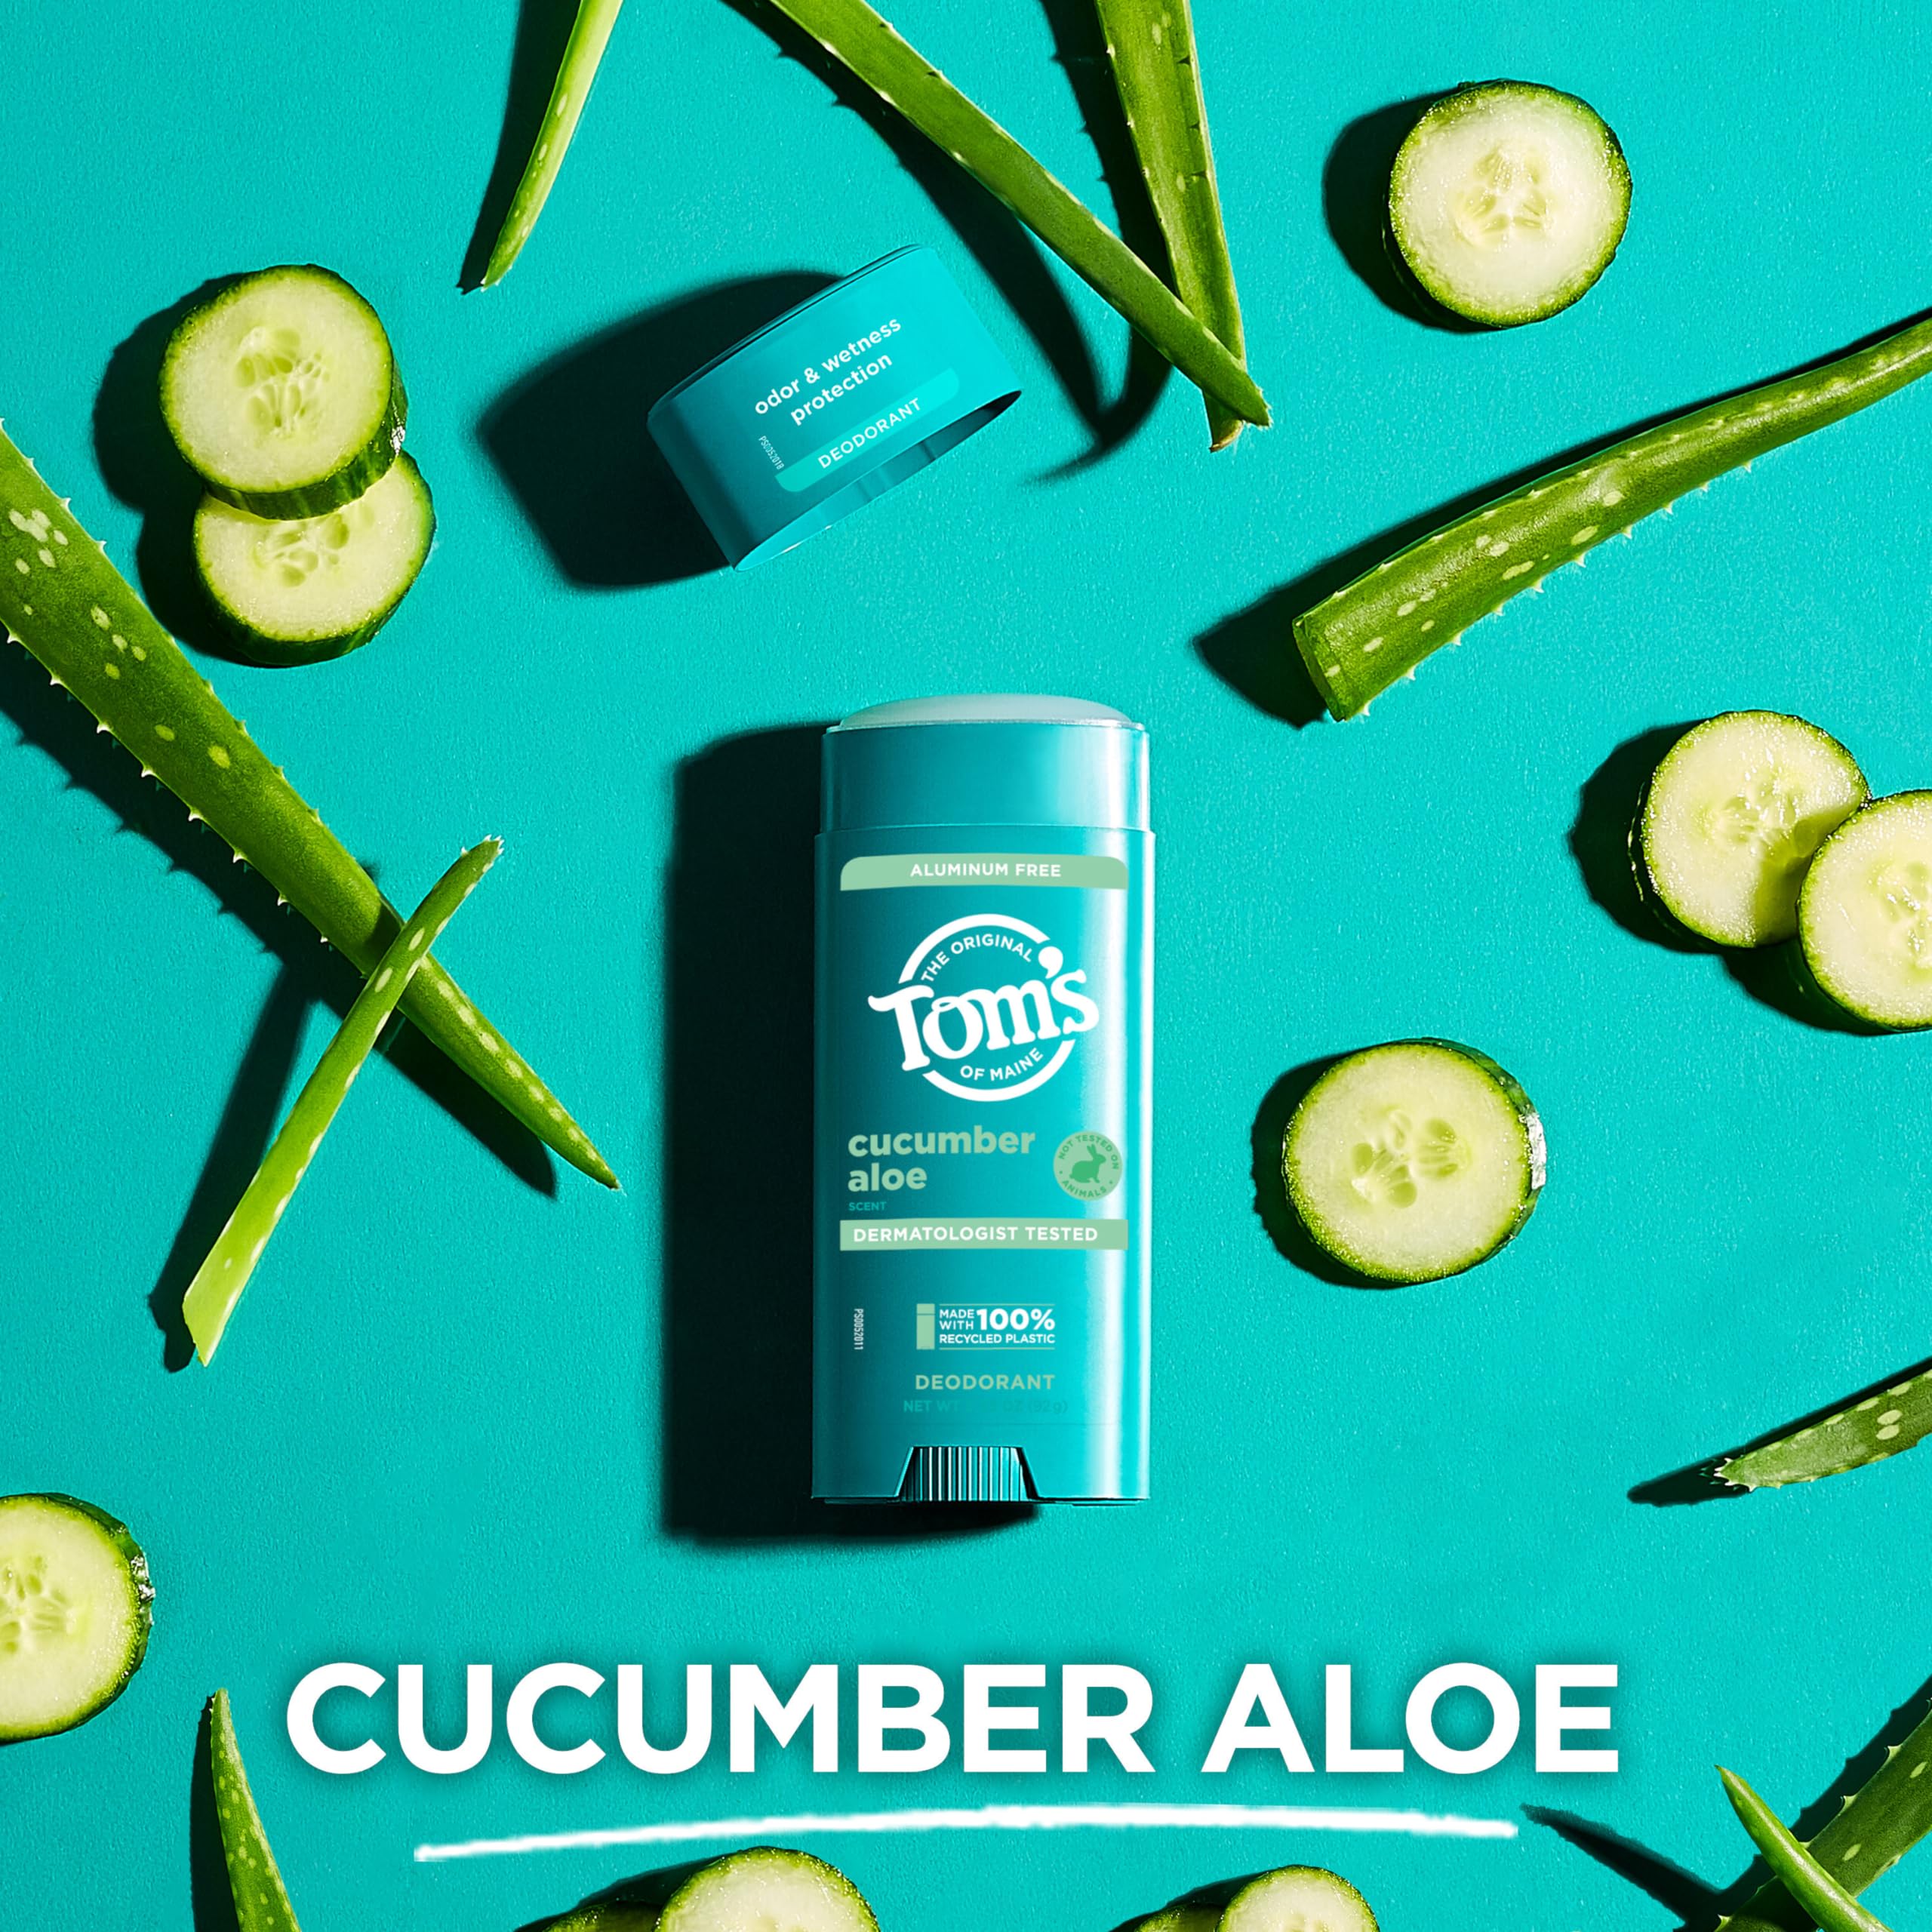 Tom’s of Maine Cucumber Aloe Natural Deodorant for Women and Men, Aluminum Free, 3.25 oz